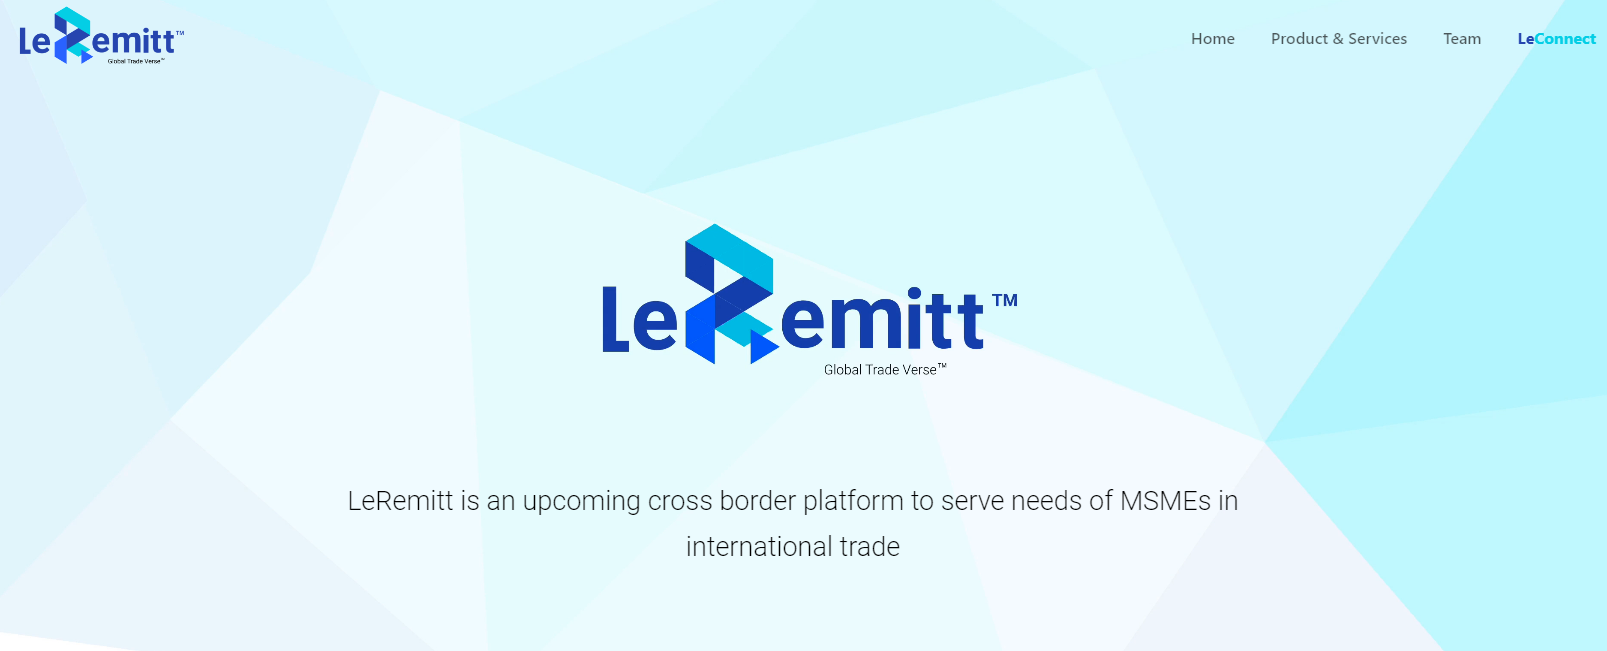 LeRemitt Secures $1.25 Million in Seed Funding Led by Axilor Ventures to Revolutionize Cross-Border Trade